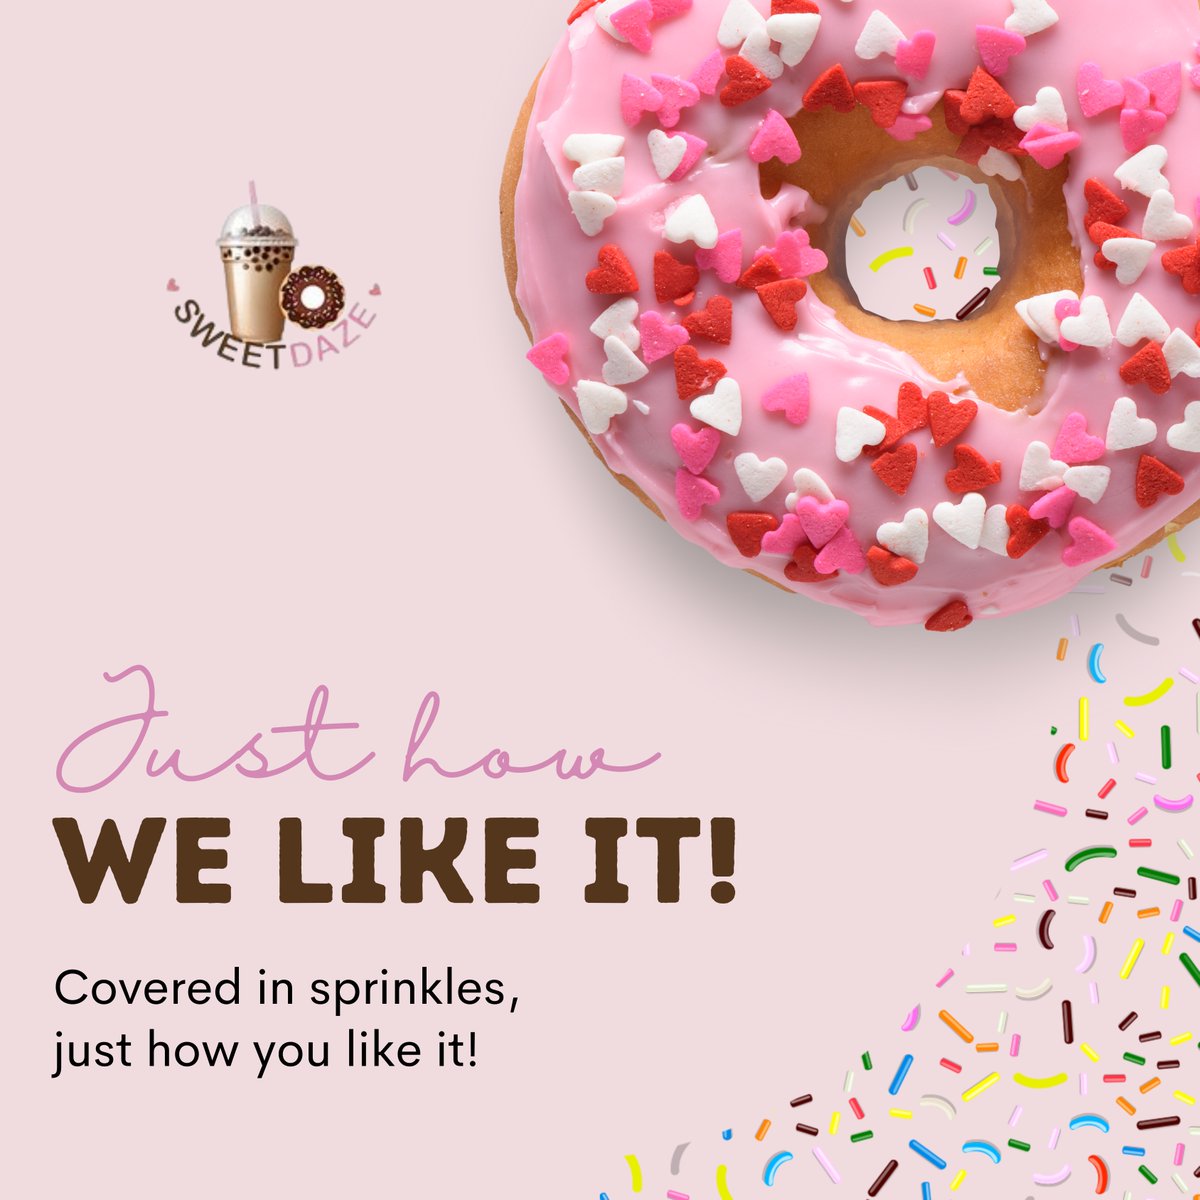 Covered in sprinkles, just how you like it! 🍩
.
#SweetDazeDonutBoba #donuts #donut #doughnuts #bestdonuts #donutshop #donutshopsf